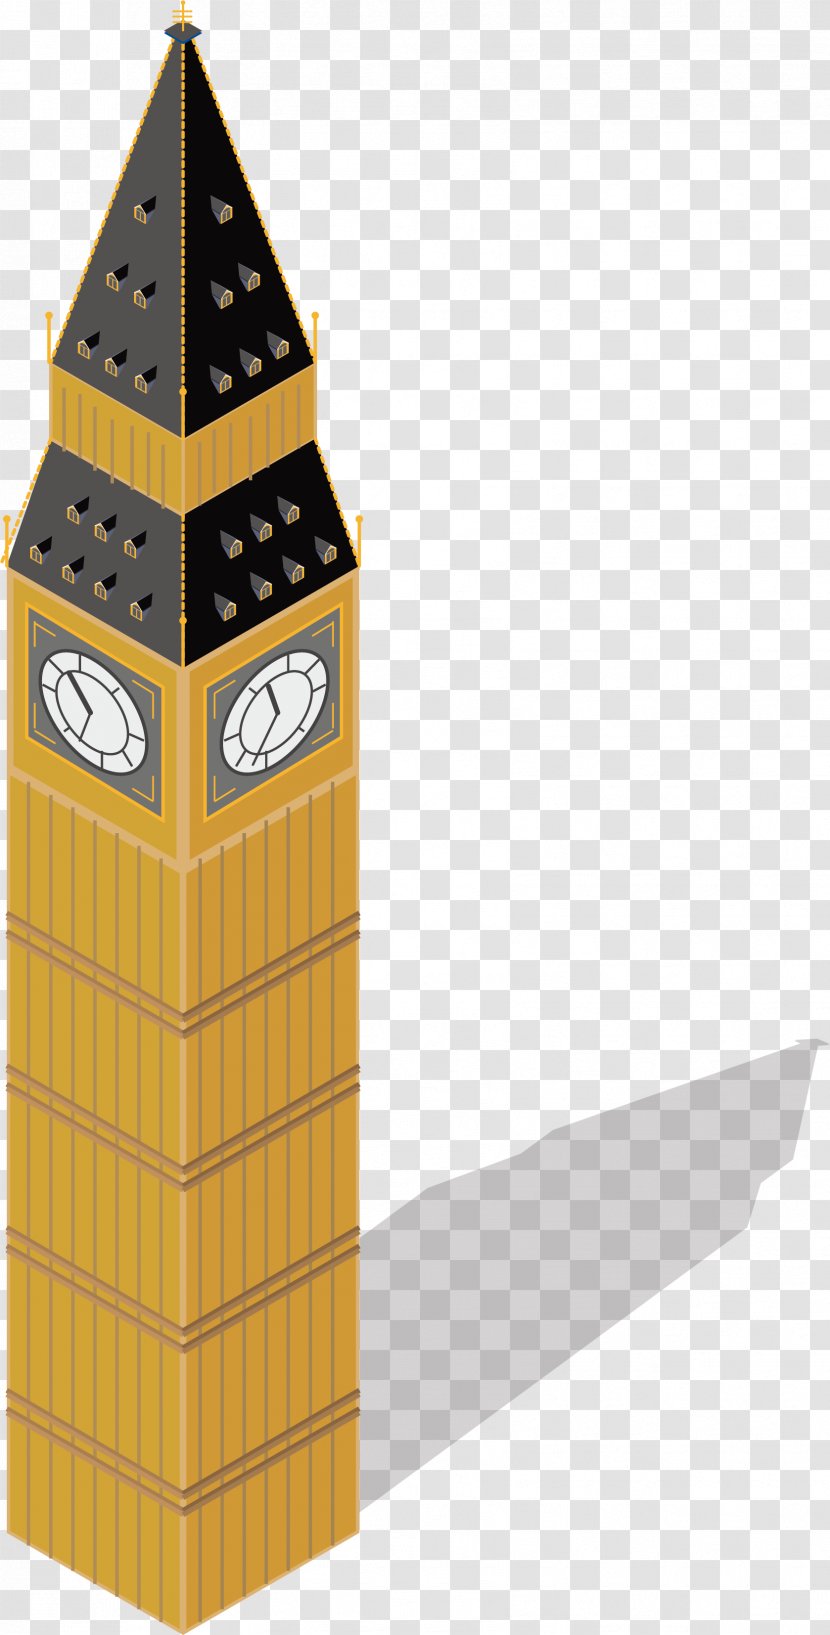 Big Ben Gothic Architecture - Clock Tower - The Landmark Transparent PNG